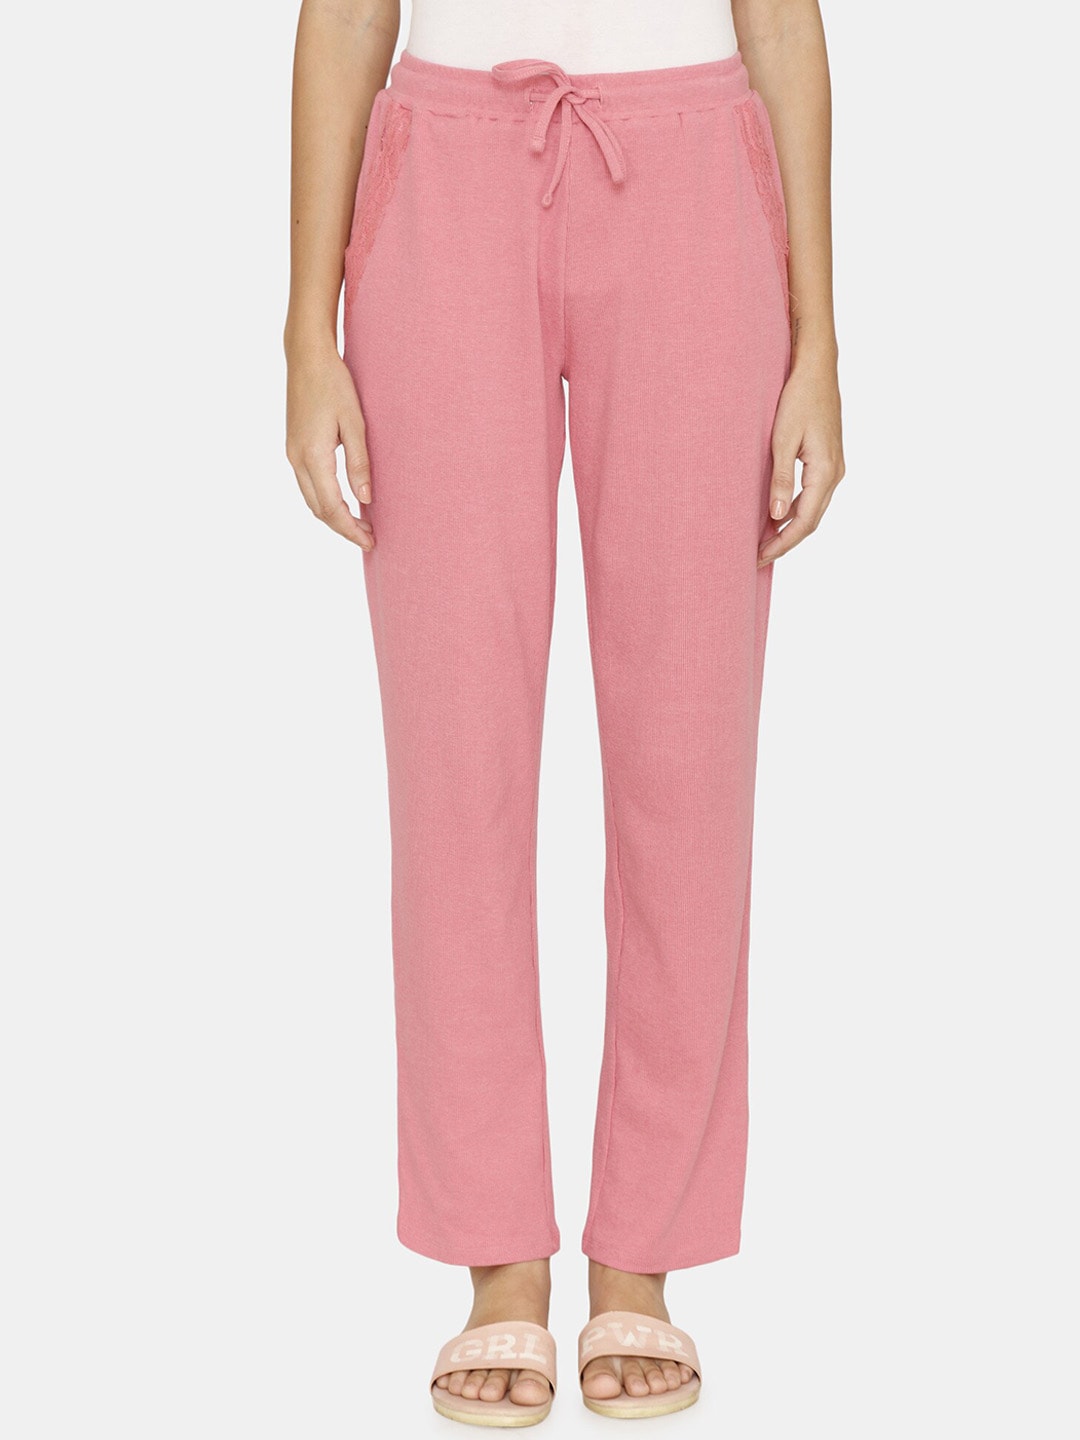 Zivame Pink Solid Cozy Heathers Knit Pyjama Price in India